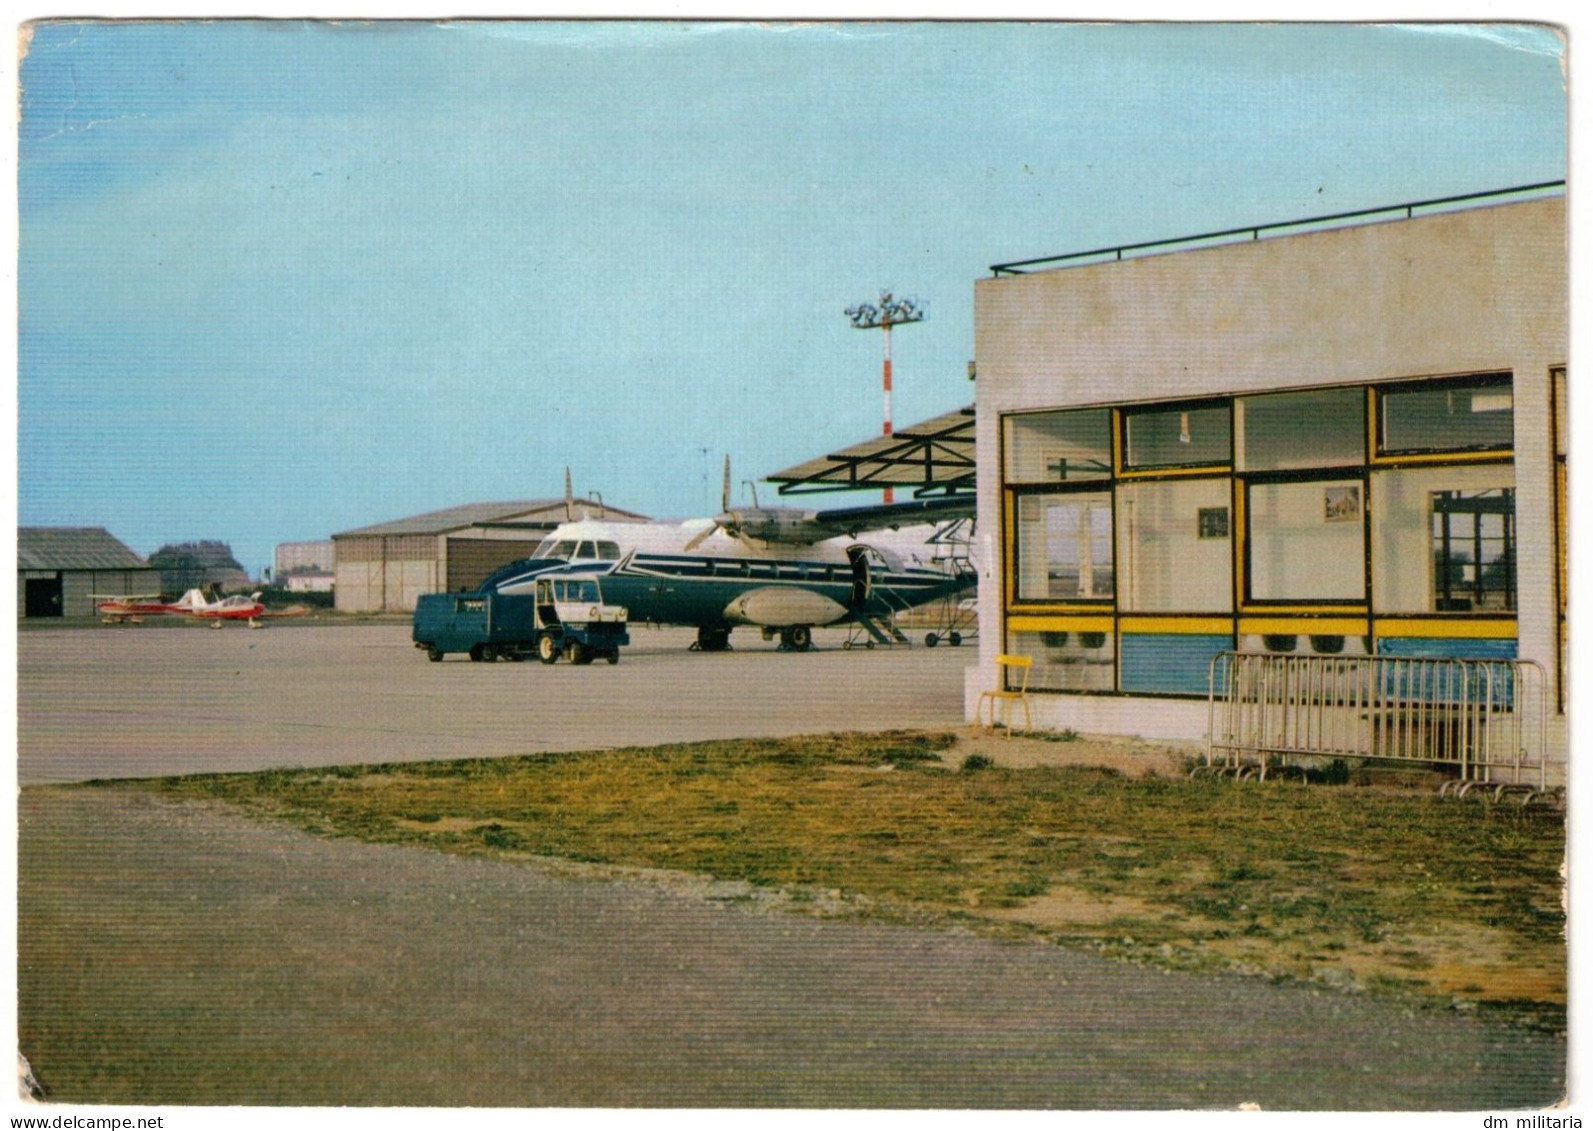 57 - METZ - L'AÉROPORT - E Ci. 6 - AVION EN ATTENTE SUR LE TARMAC - MARLY FRESCATY - MOSELLE - Vliegvelden